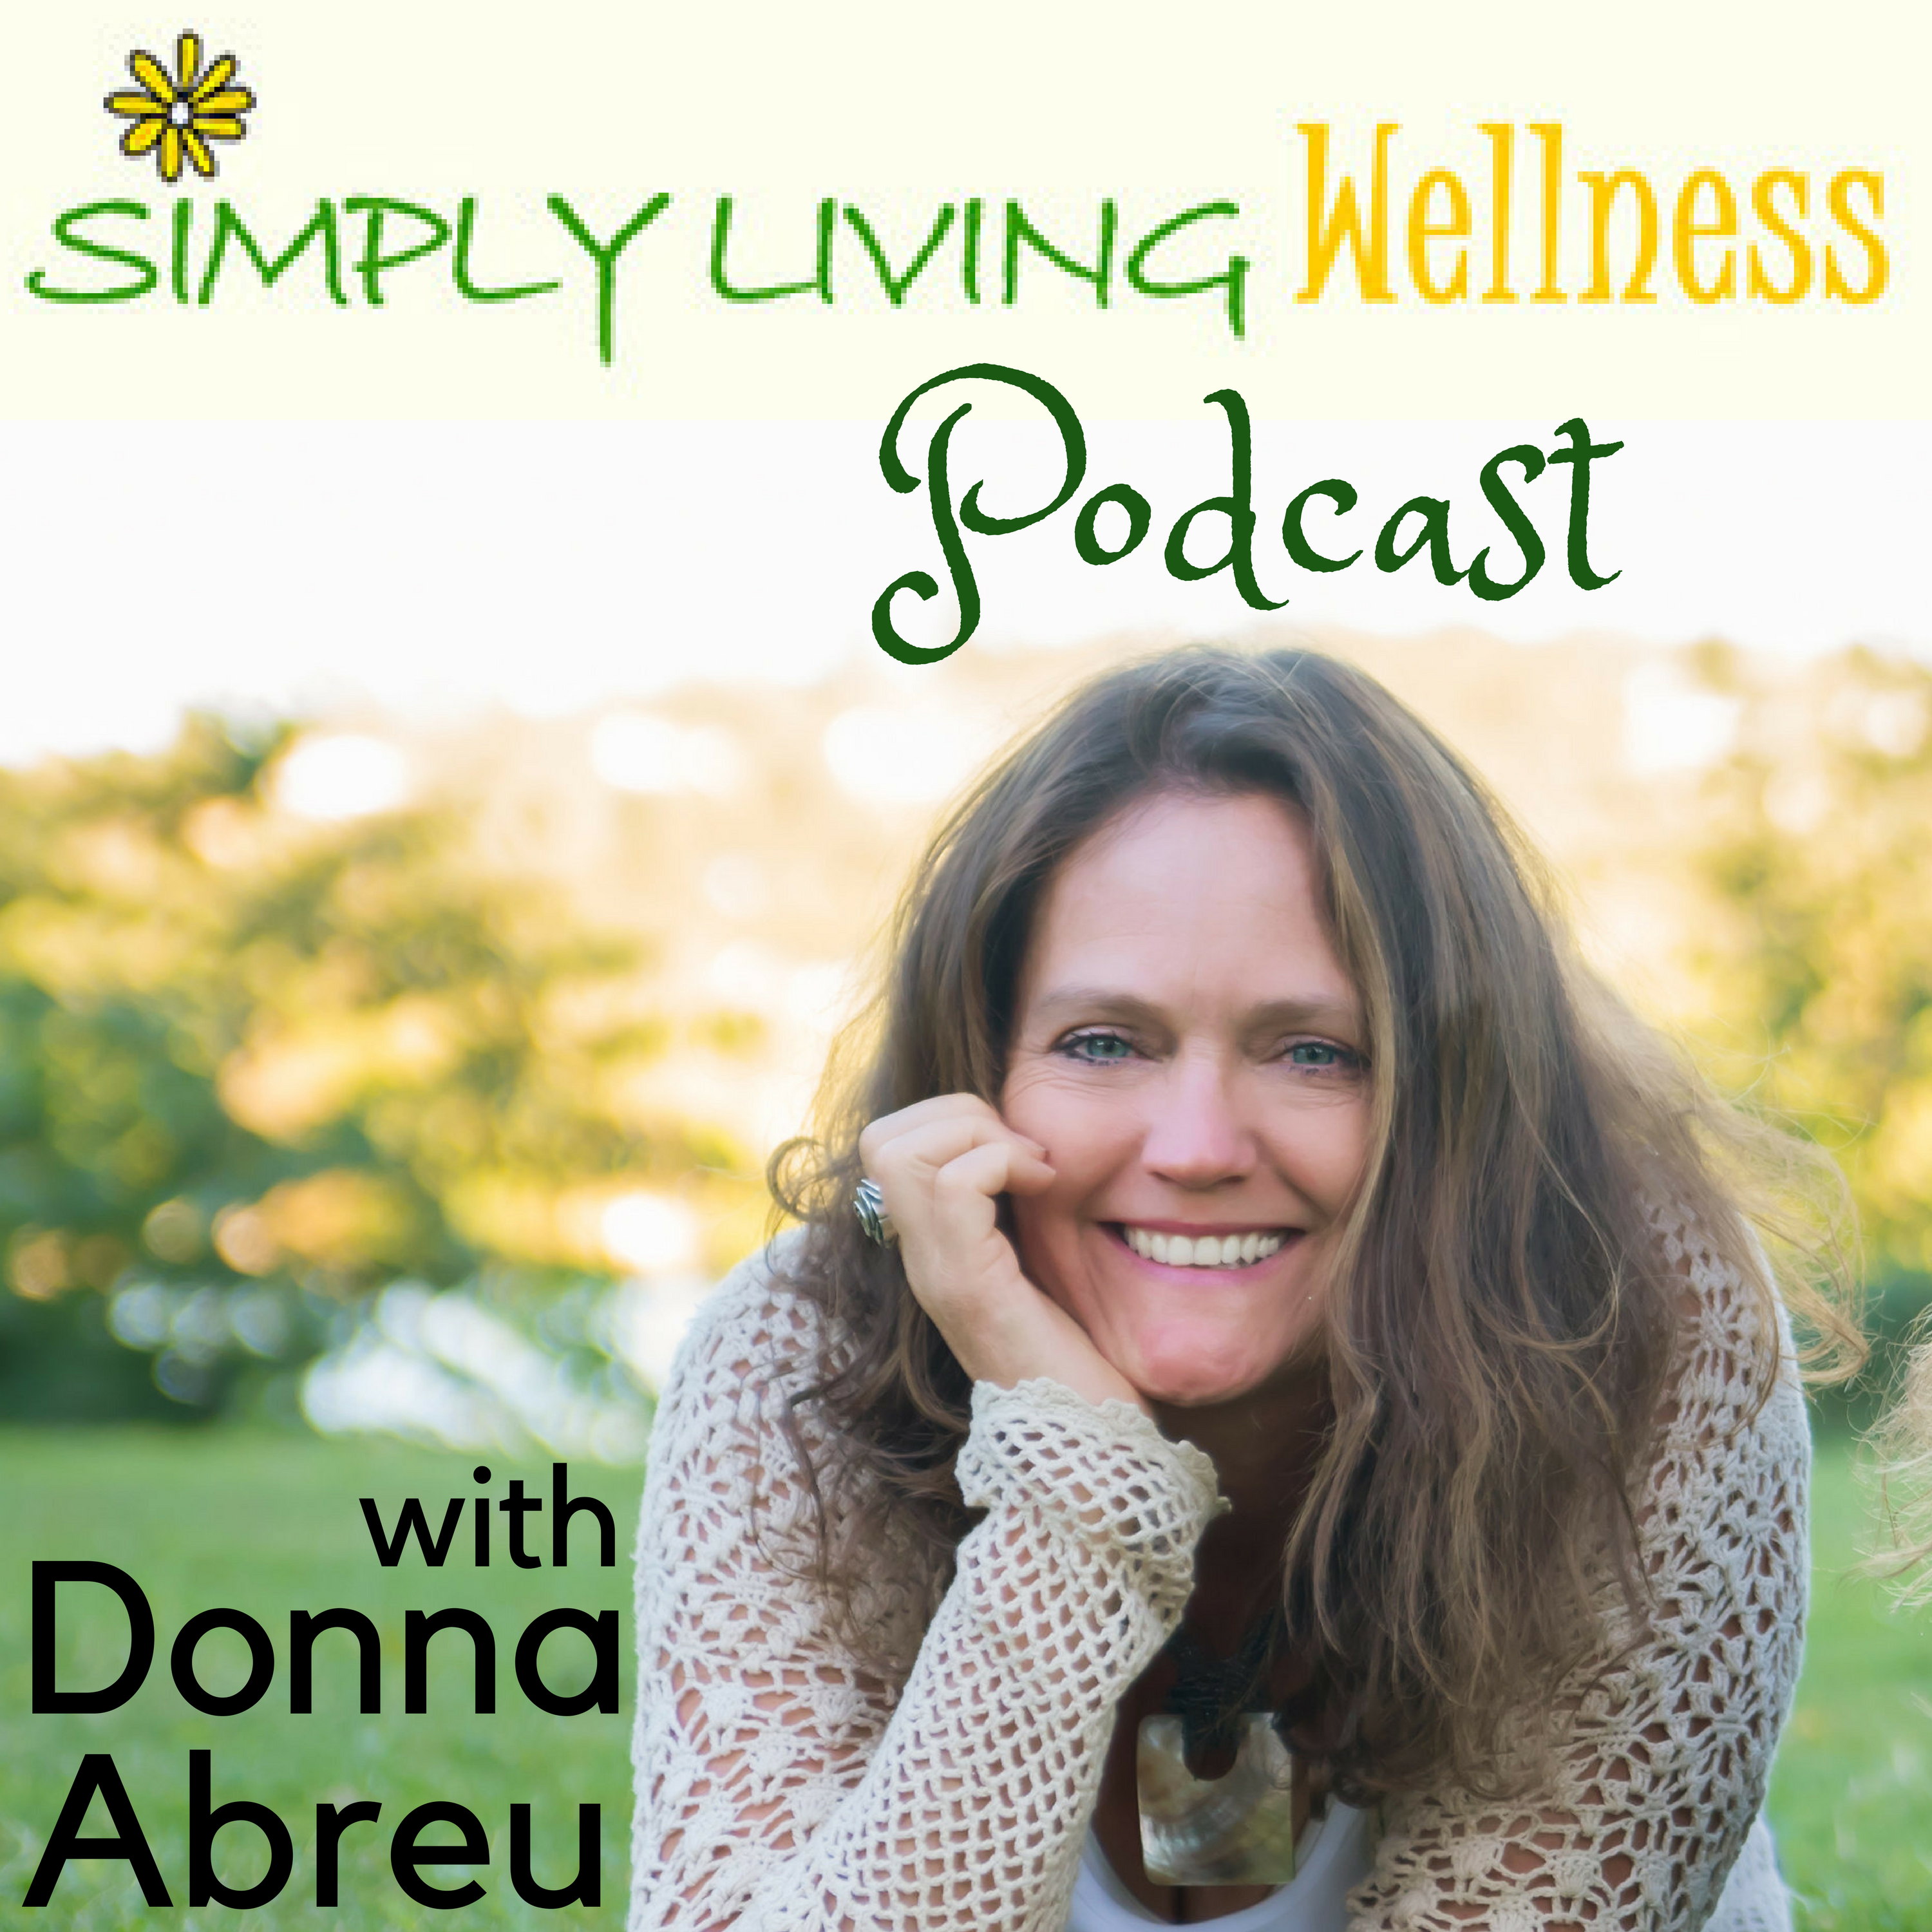 Simply Living Wellness Podcast